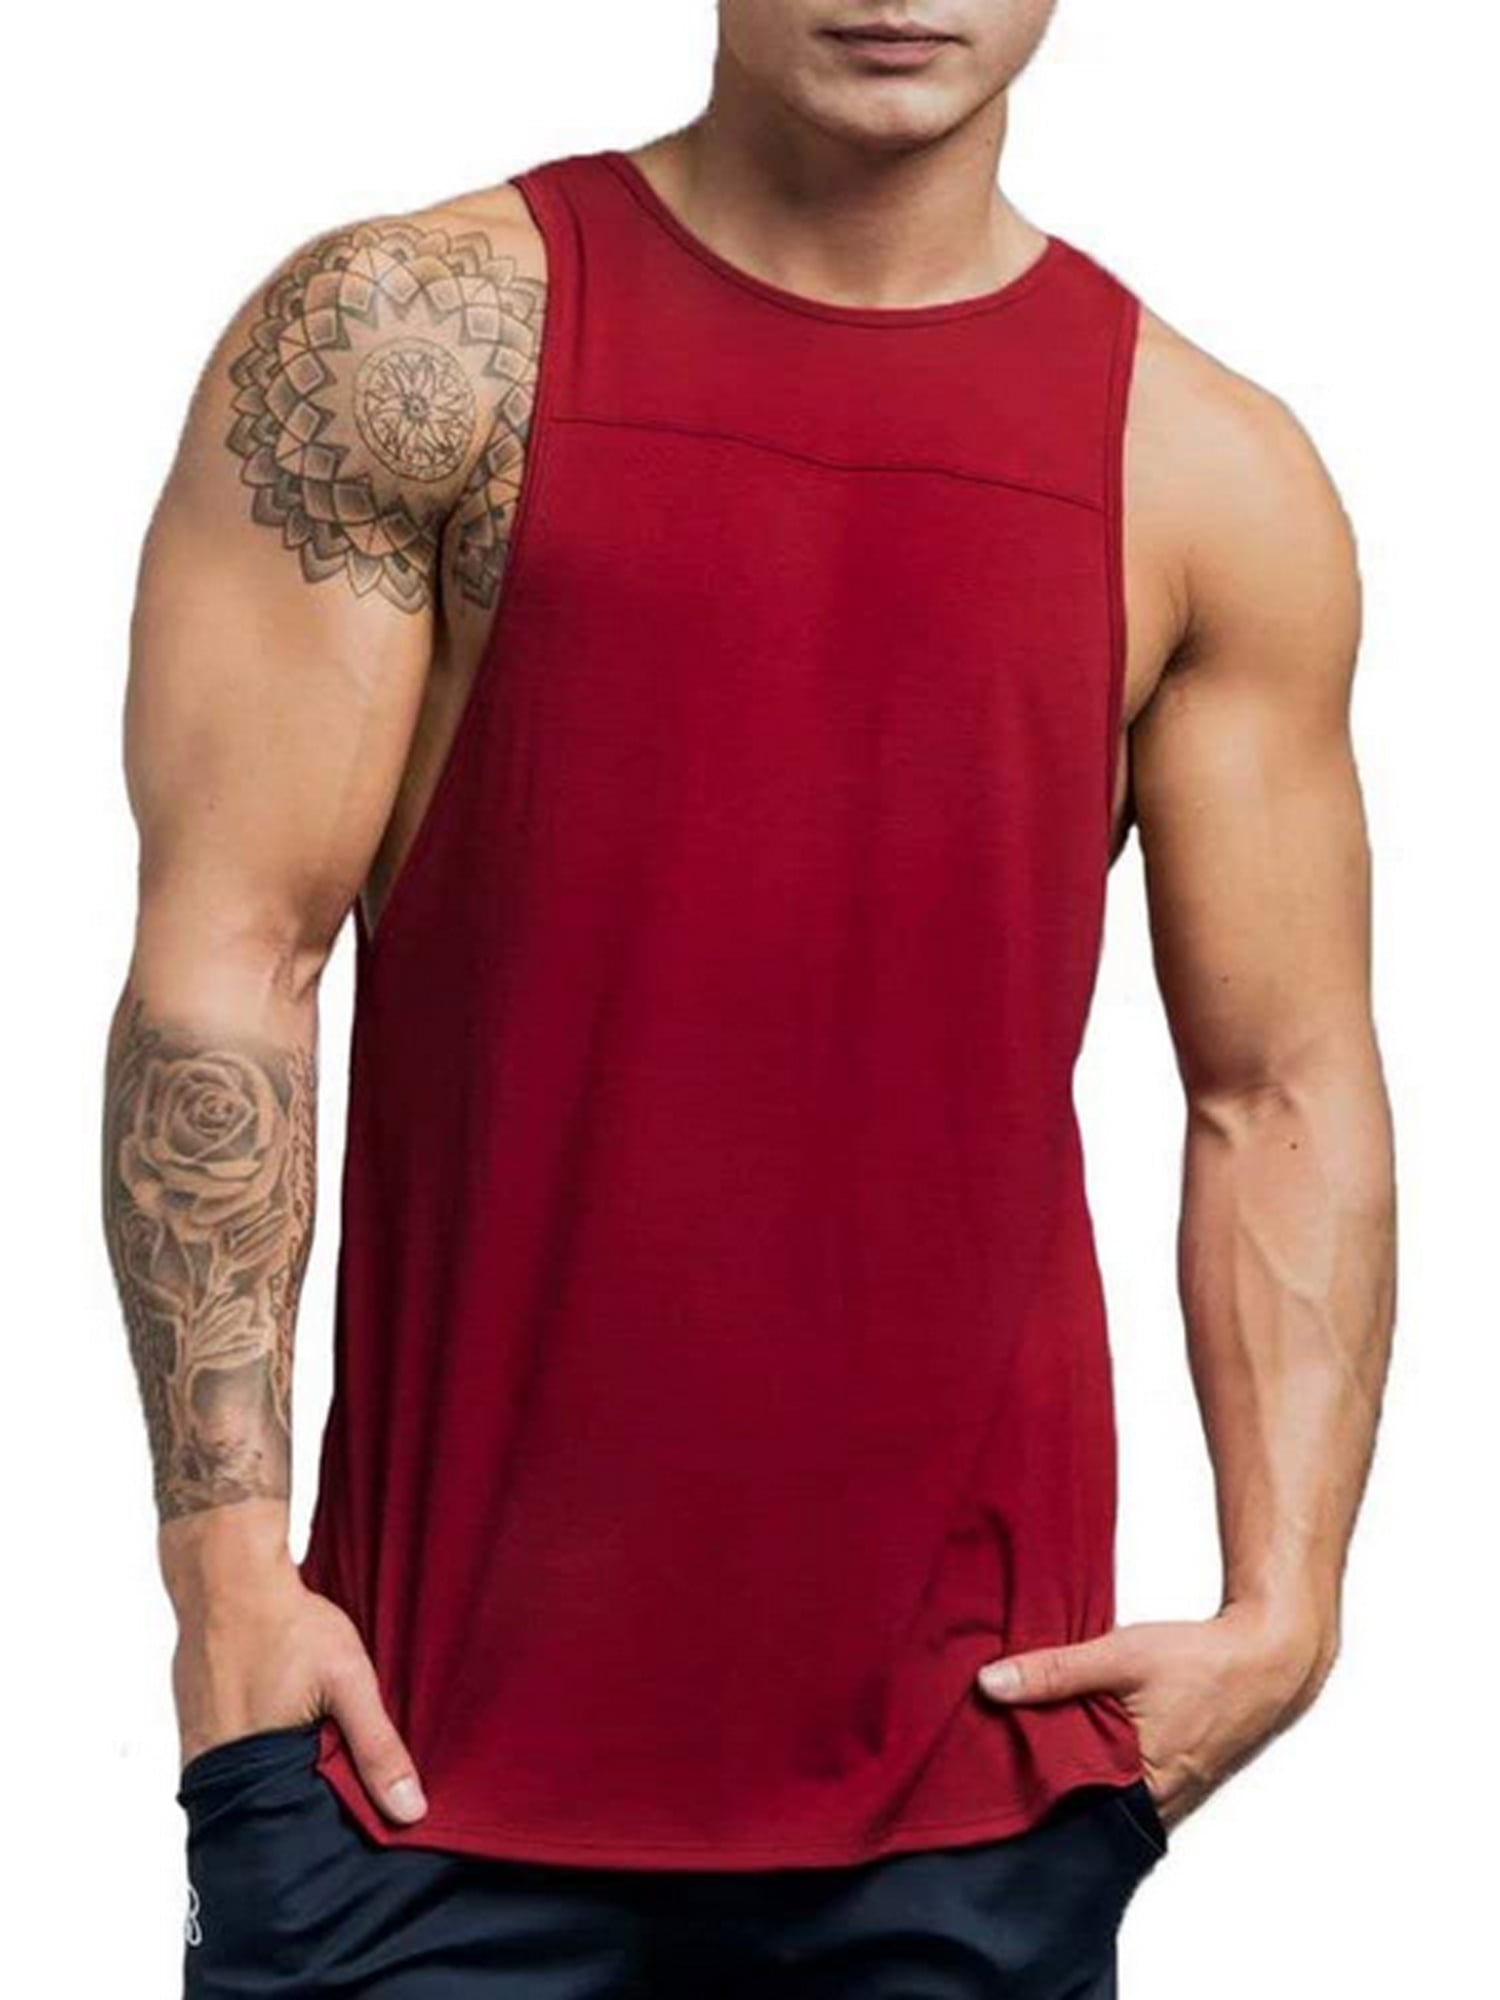 Mens Sleeveless Shirts Sport Clothing Gym Fitness Stringer Tank Top Wear Men Fit 